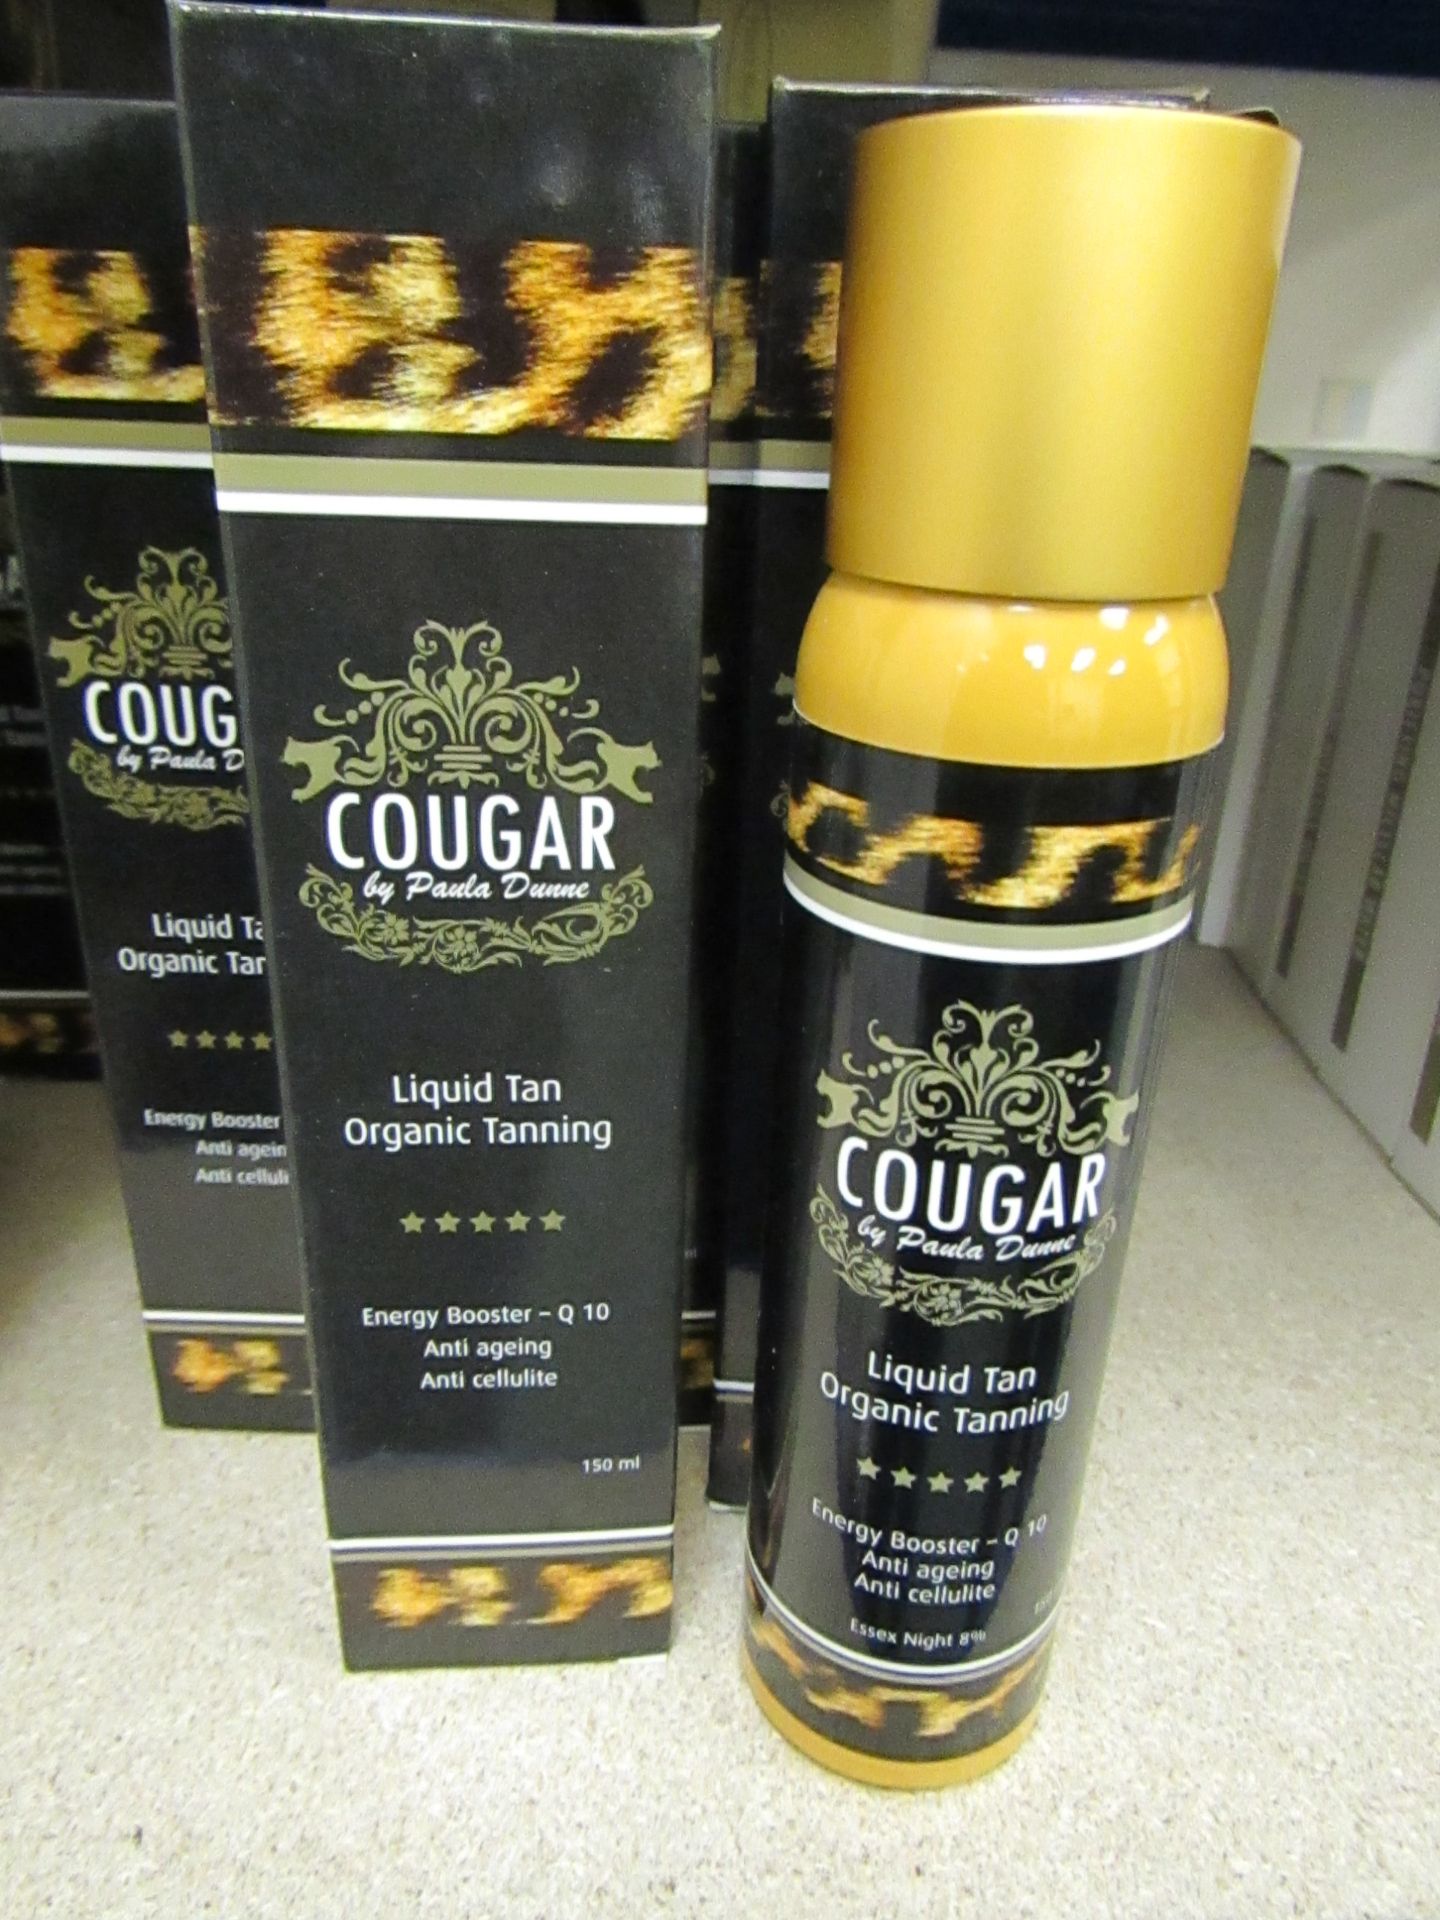 2 x Cougar 150ml Essex nights 8% Organic Tanning liquid tan, both brand new and boxed.